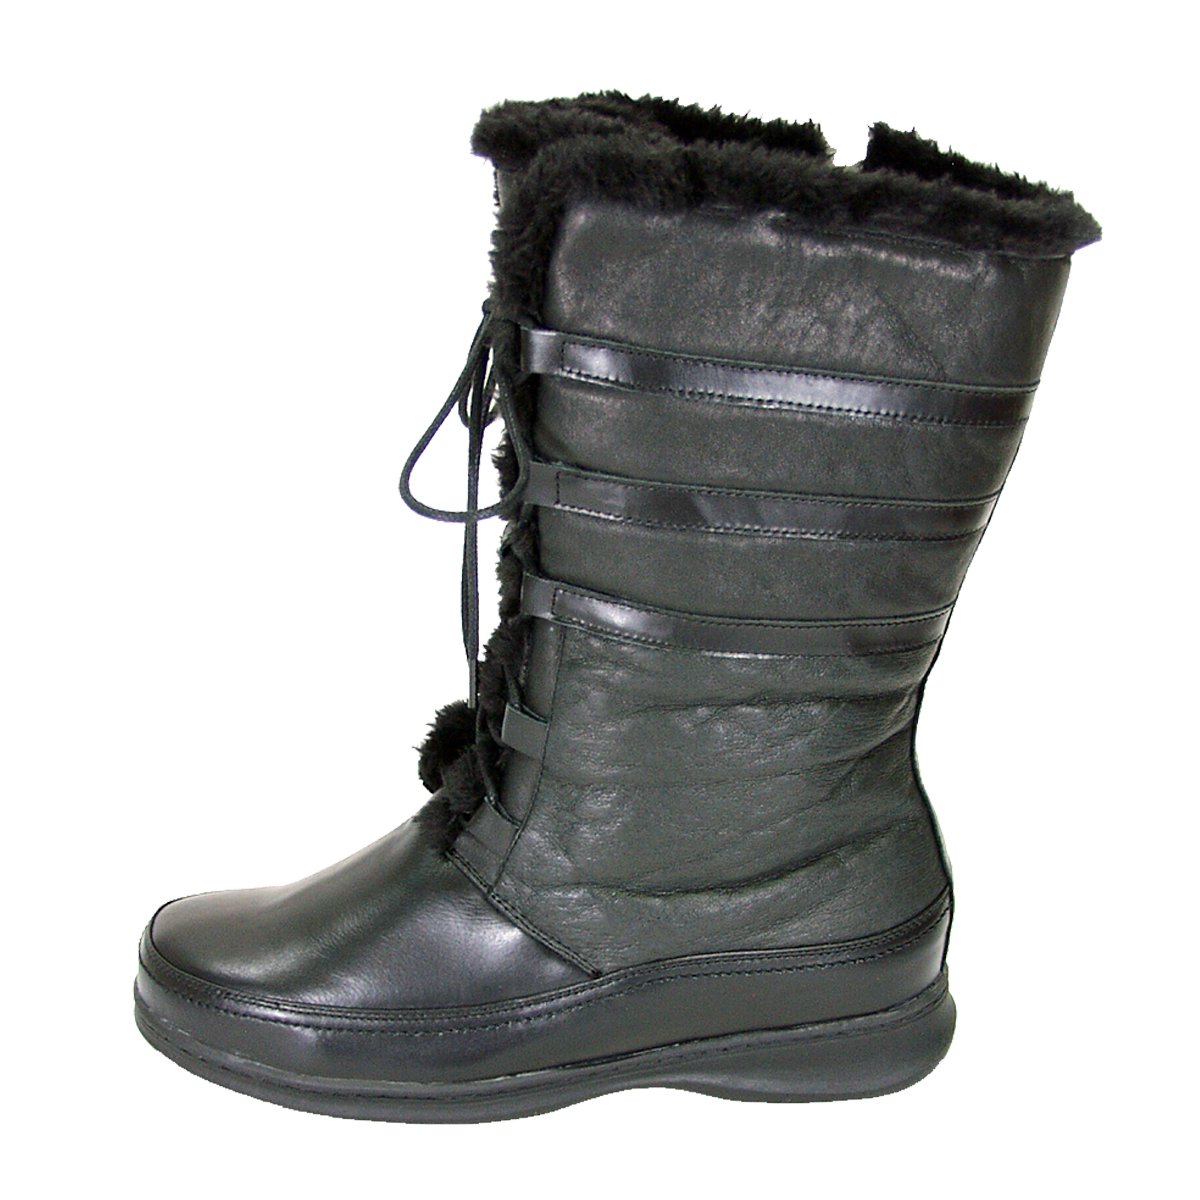 PEERAGE Joan Women's Wide Width Leather Mid-Calf Boots